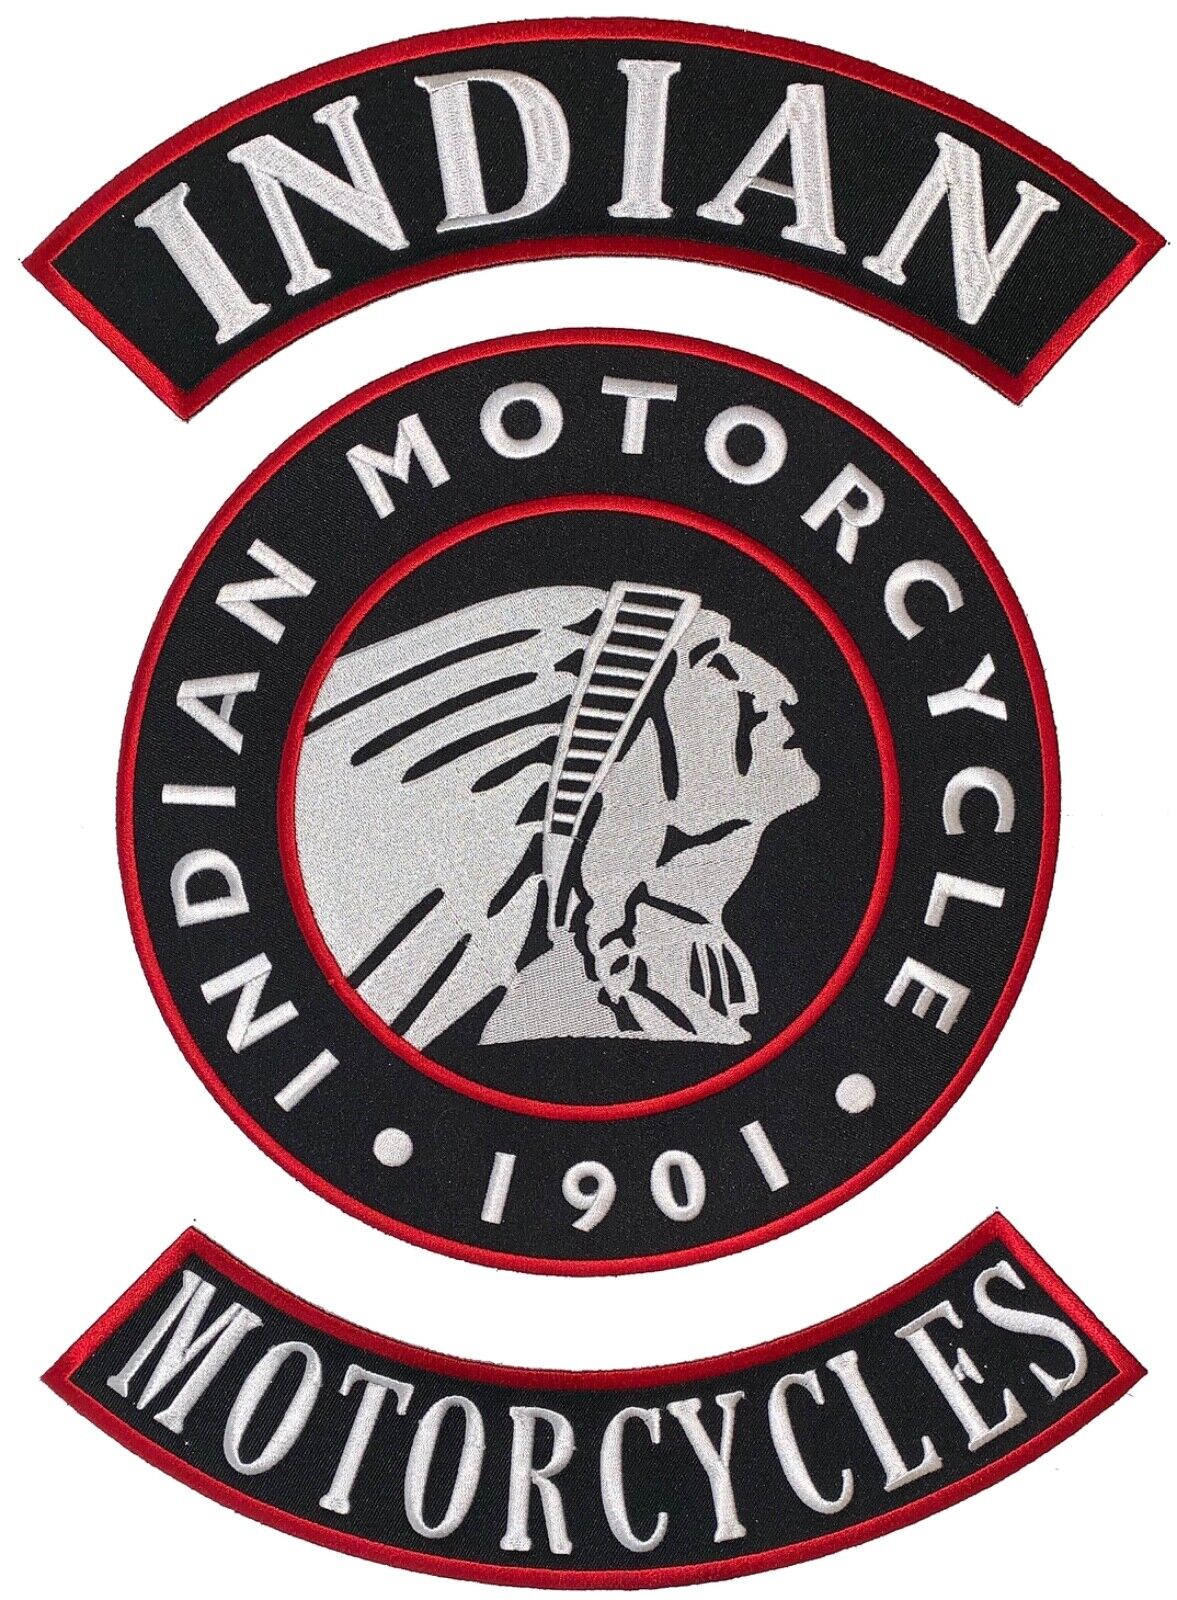 Vintage Style Indian Motorcycle Back Patch set. Top & Bottom Rocker + 10” Center